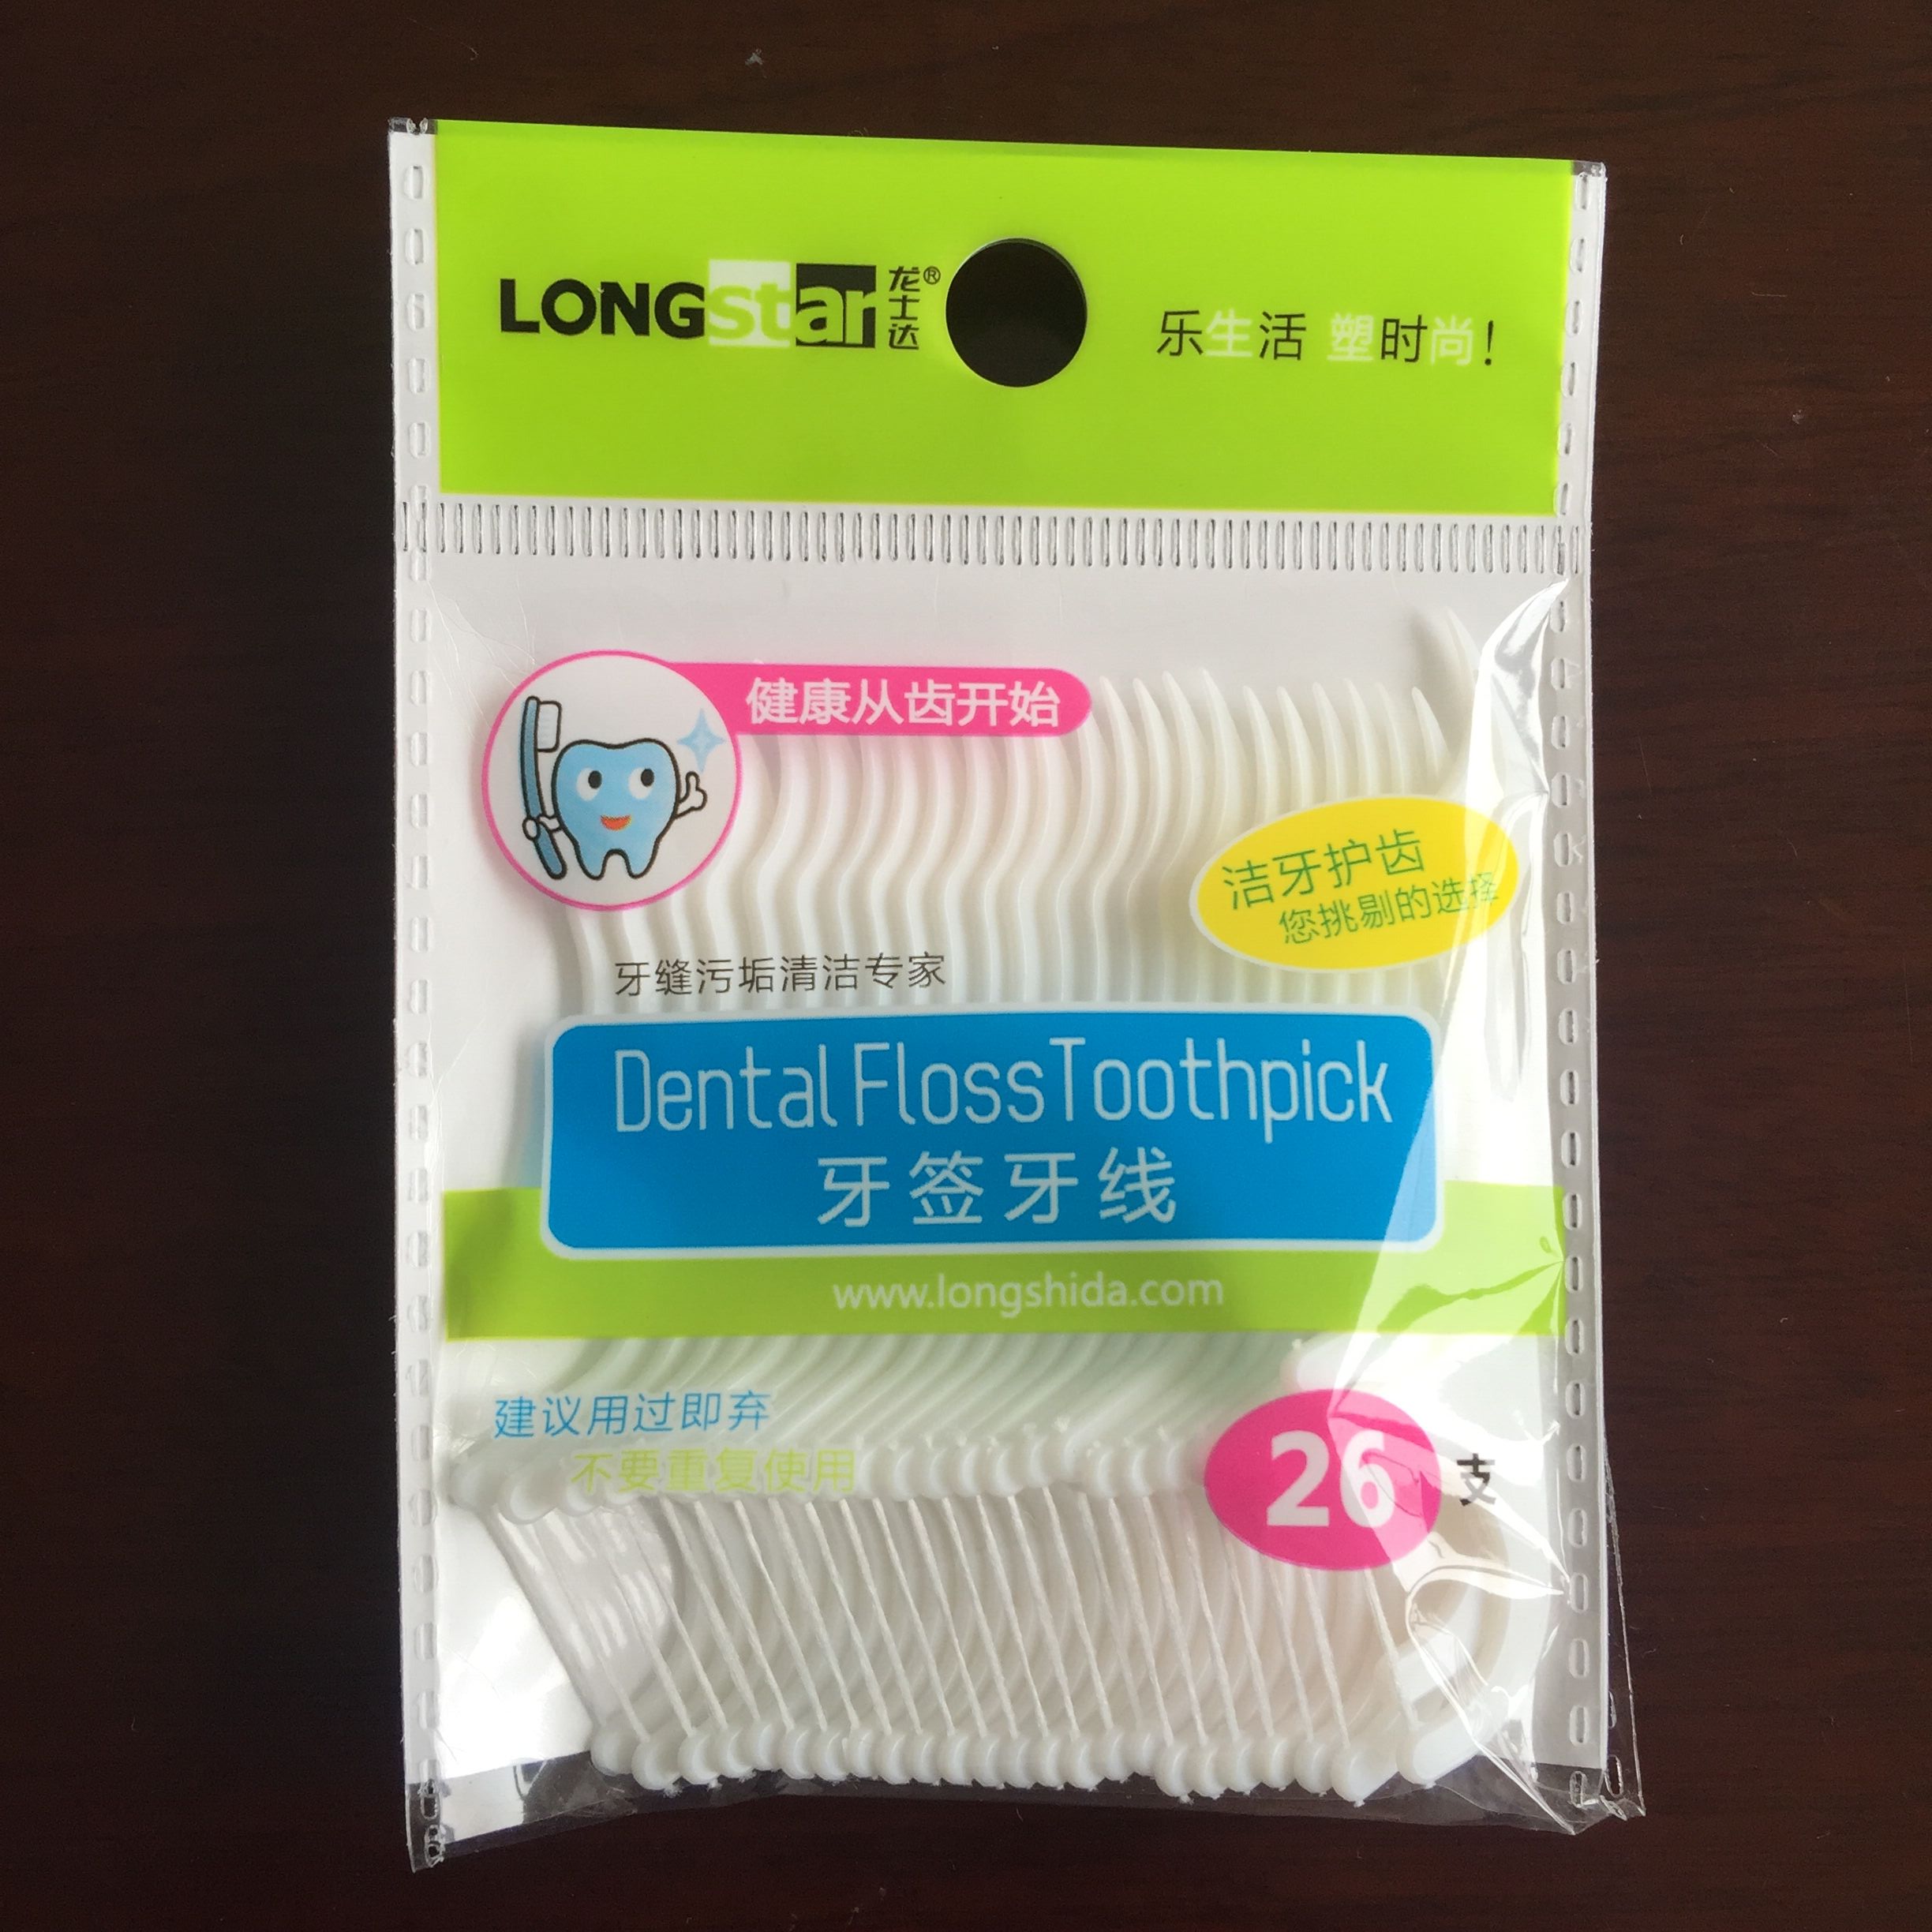 Customer Printed Laminated plastic food grade packaging A